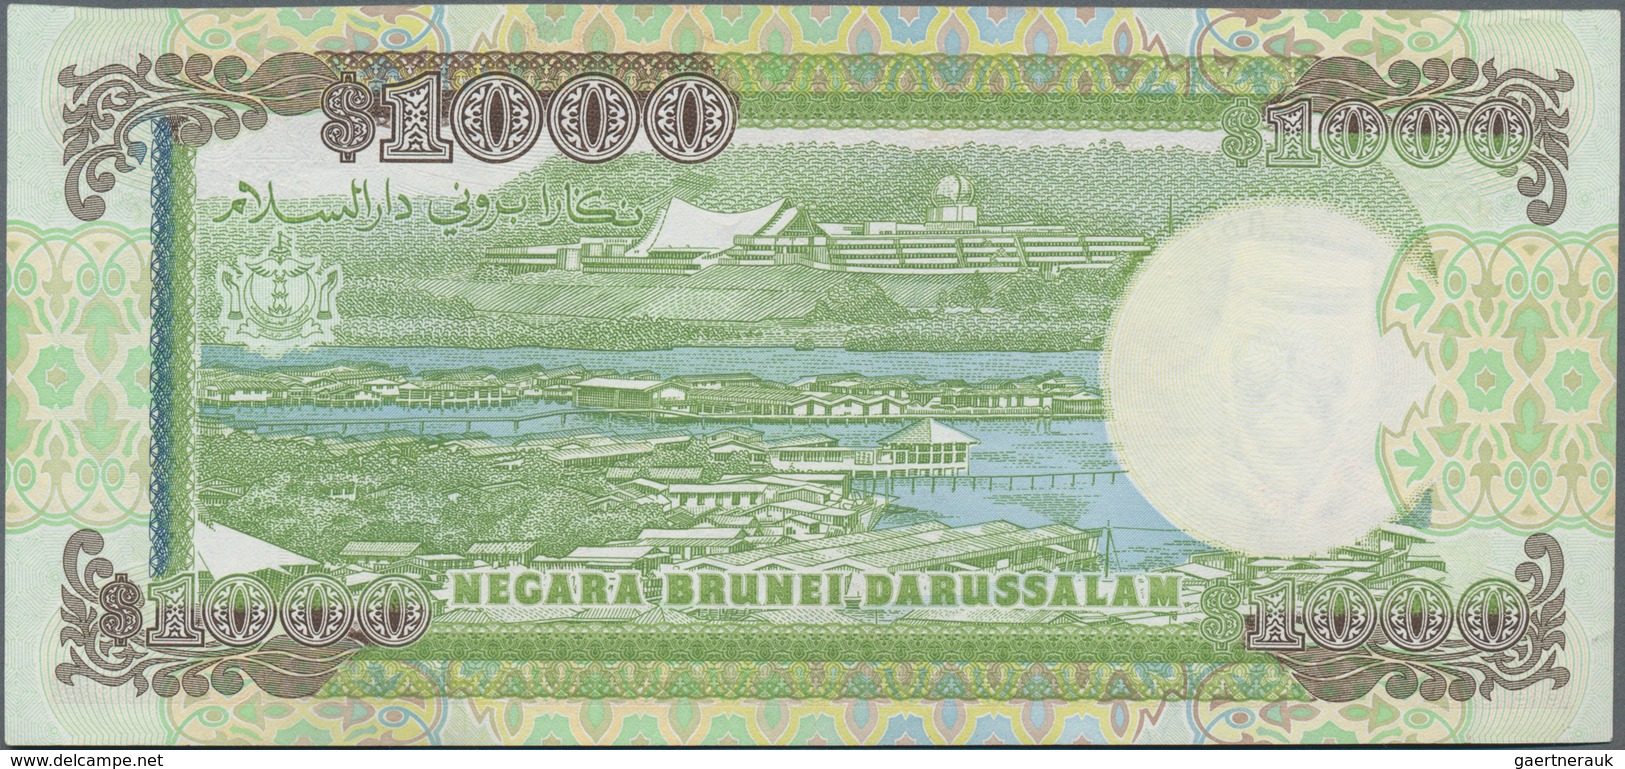 Brunei: Negara Brunei Darussalam 1000 Ringgit 1989, P.19, Completely Unfolded And Almost Perfect Con - Brunei